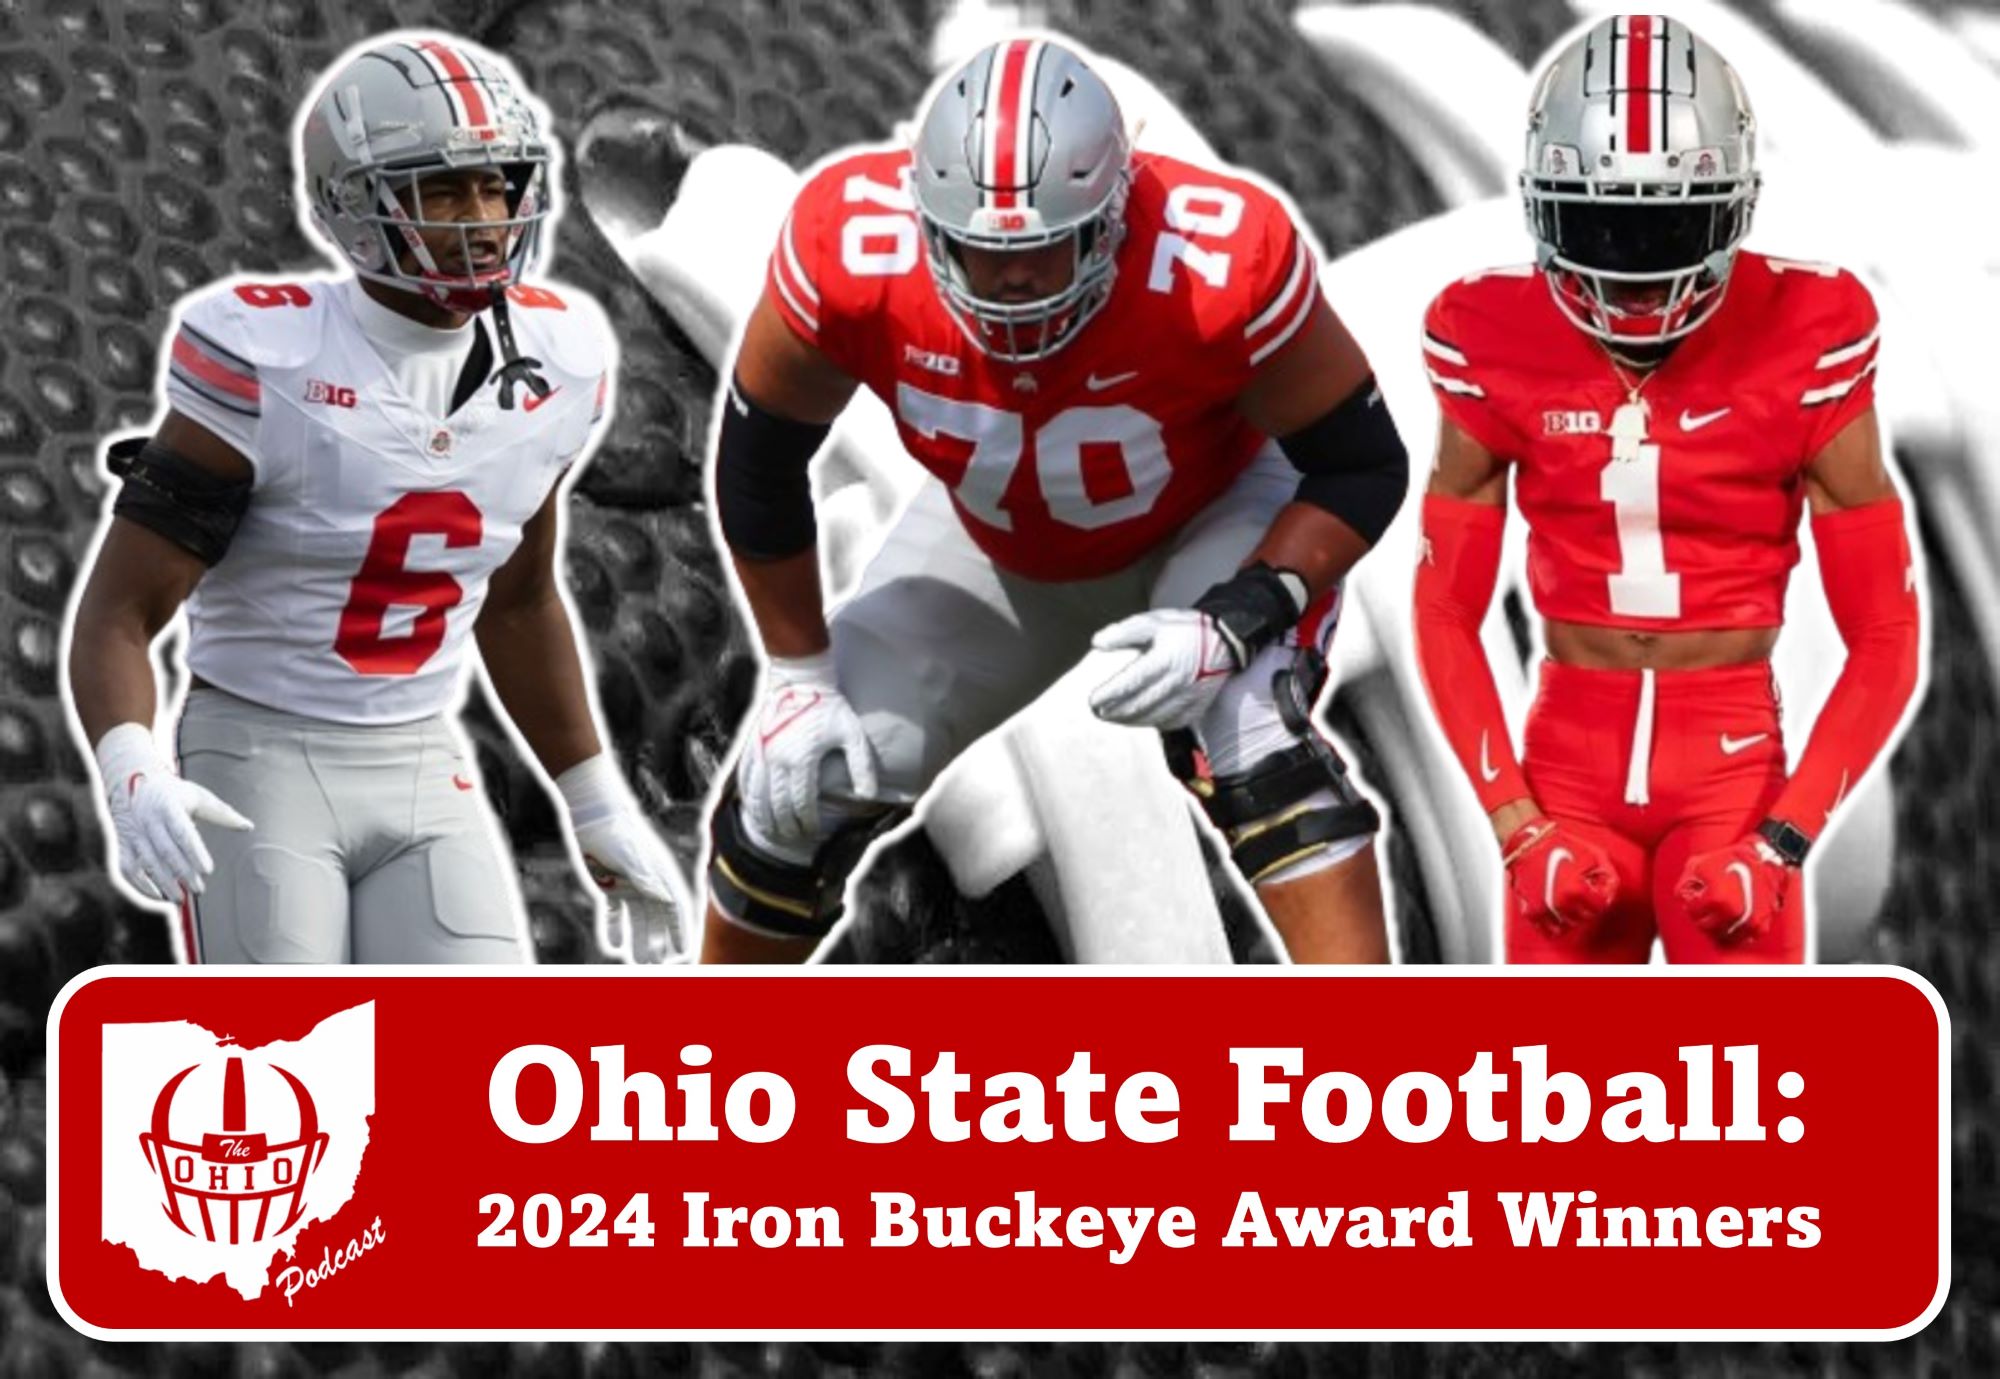 Josh Fryar, Sonny Styles, and Davison Igbinosun were named Ohio State's 2024 Iron Buckeye Award Winners.